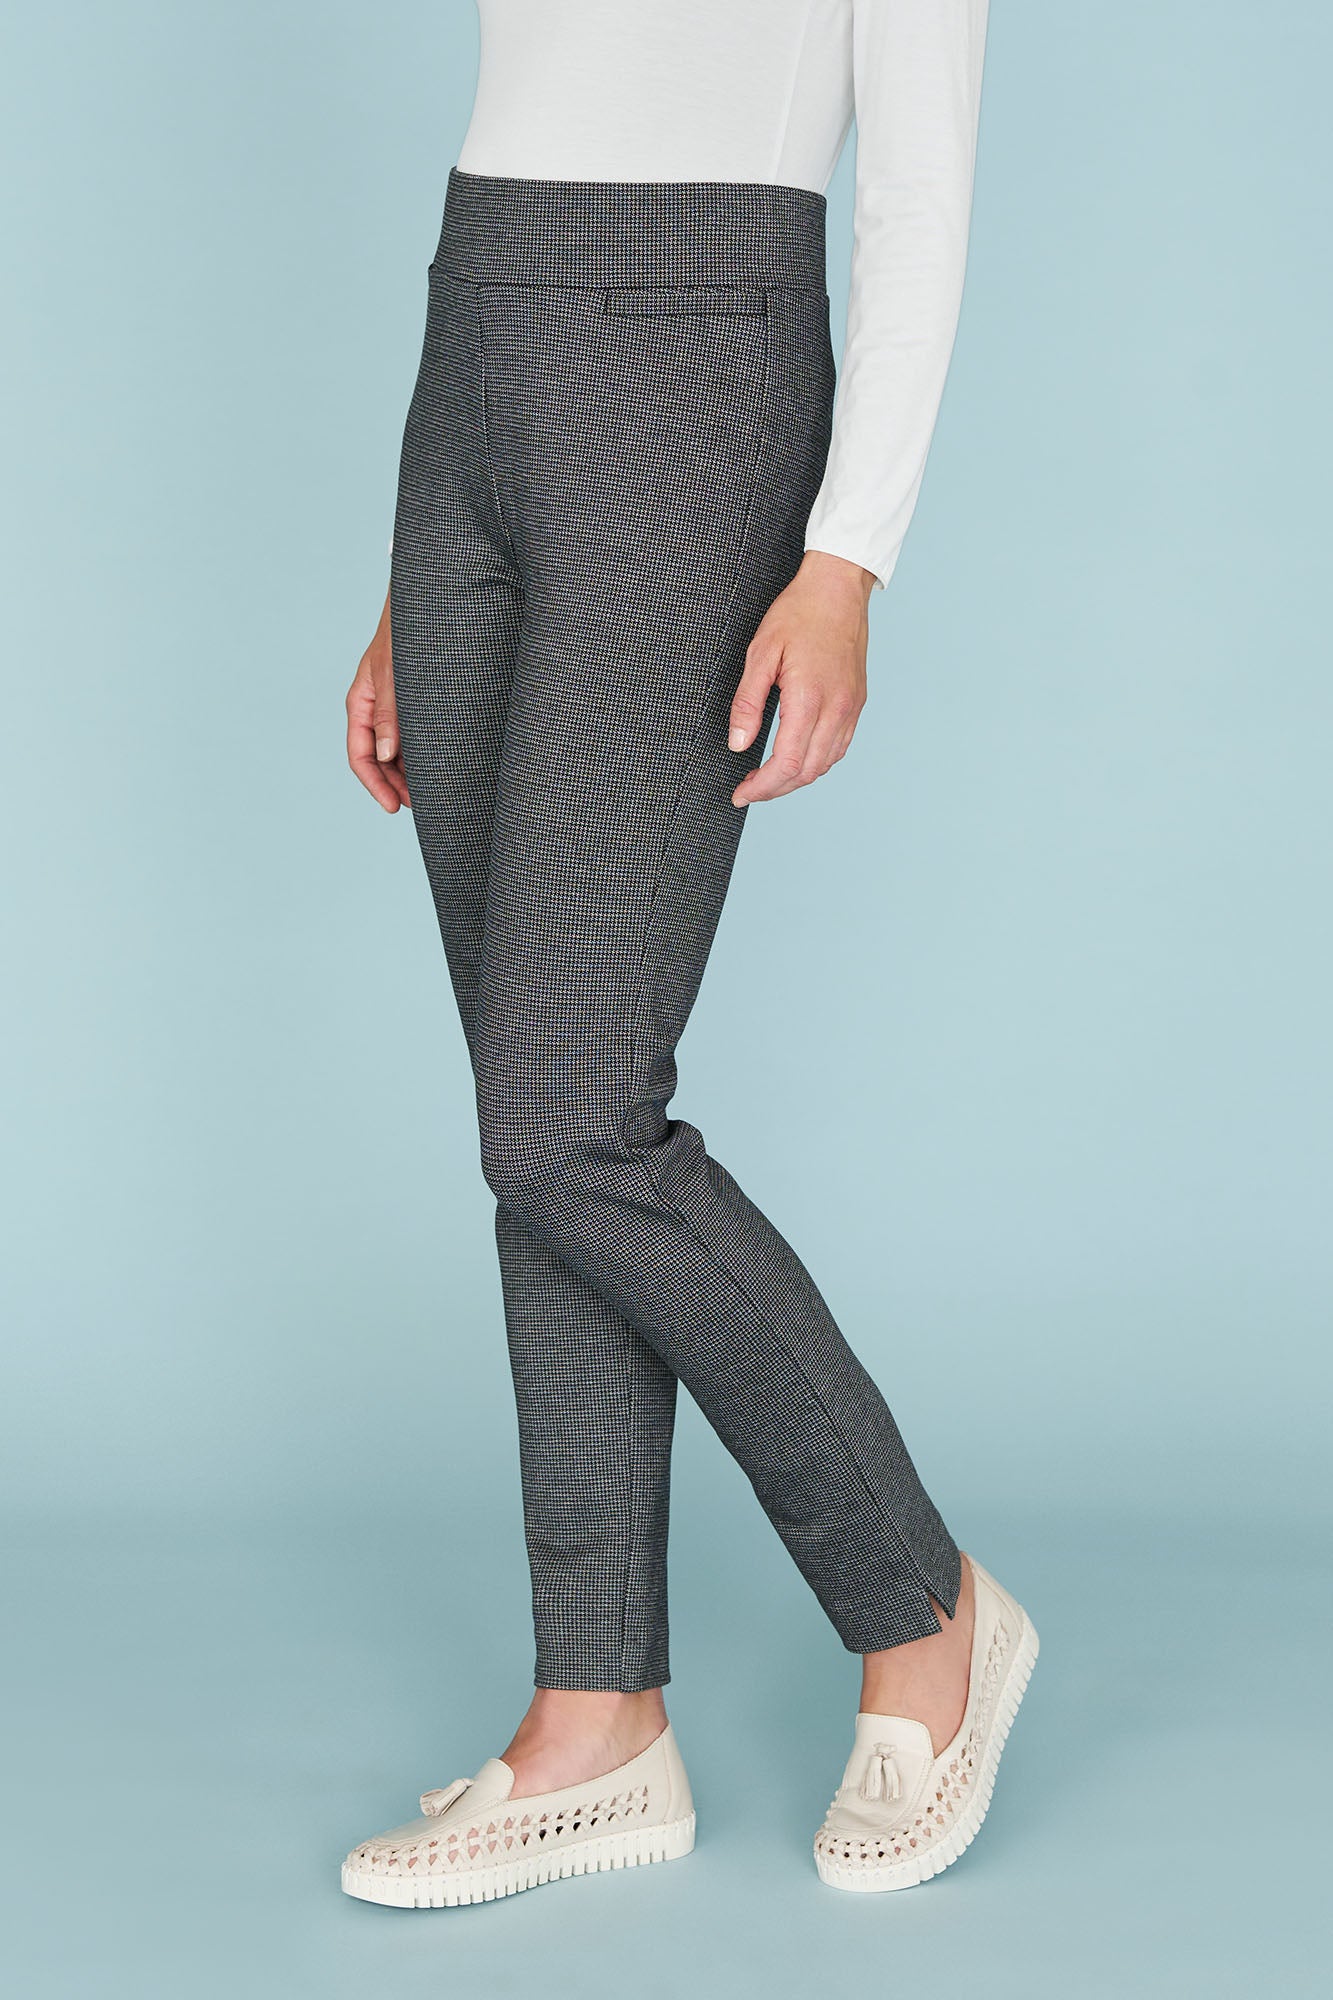 Buy DHRUVI TRENDZ Women's Regular Fit Formal Trousers Black_S at Amazon.in